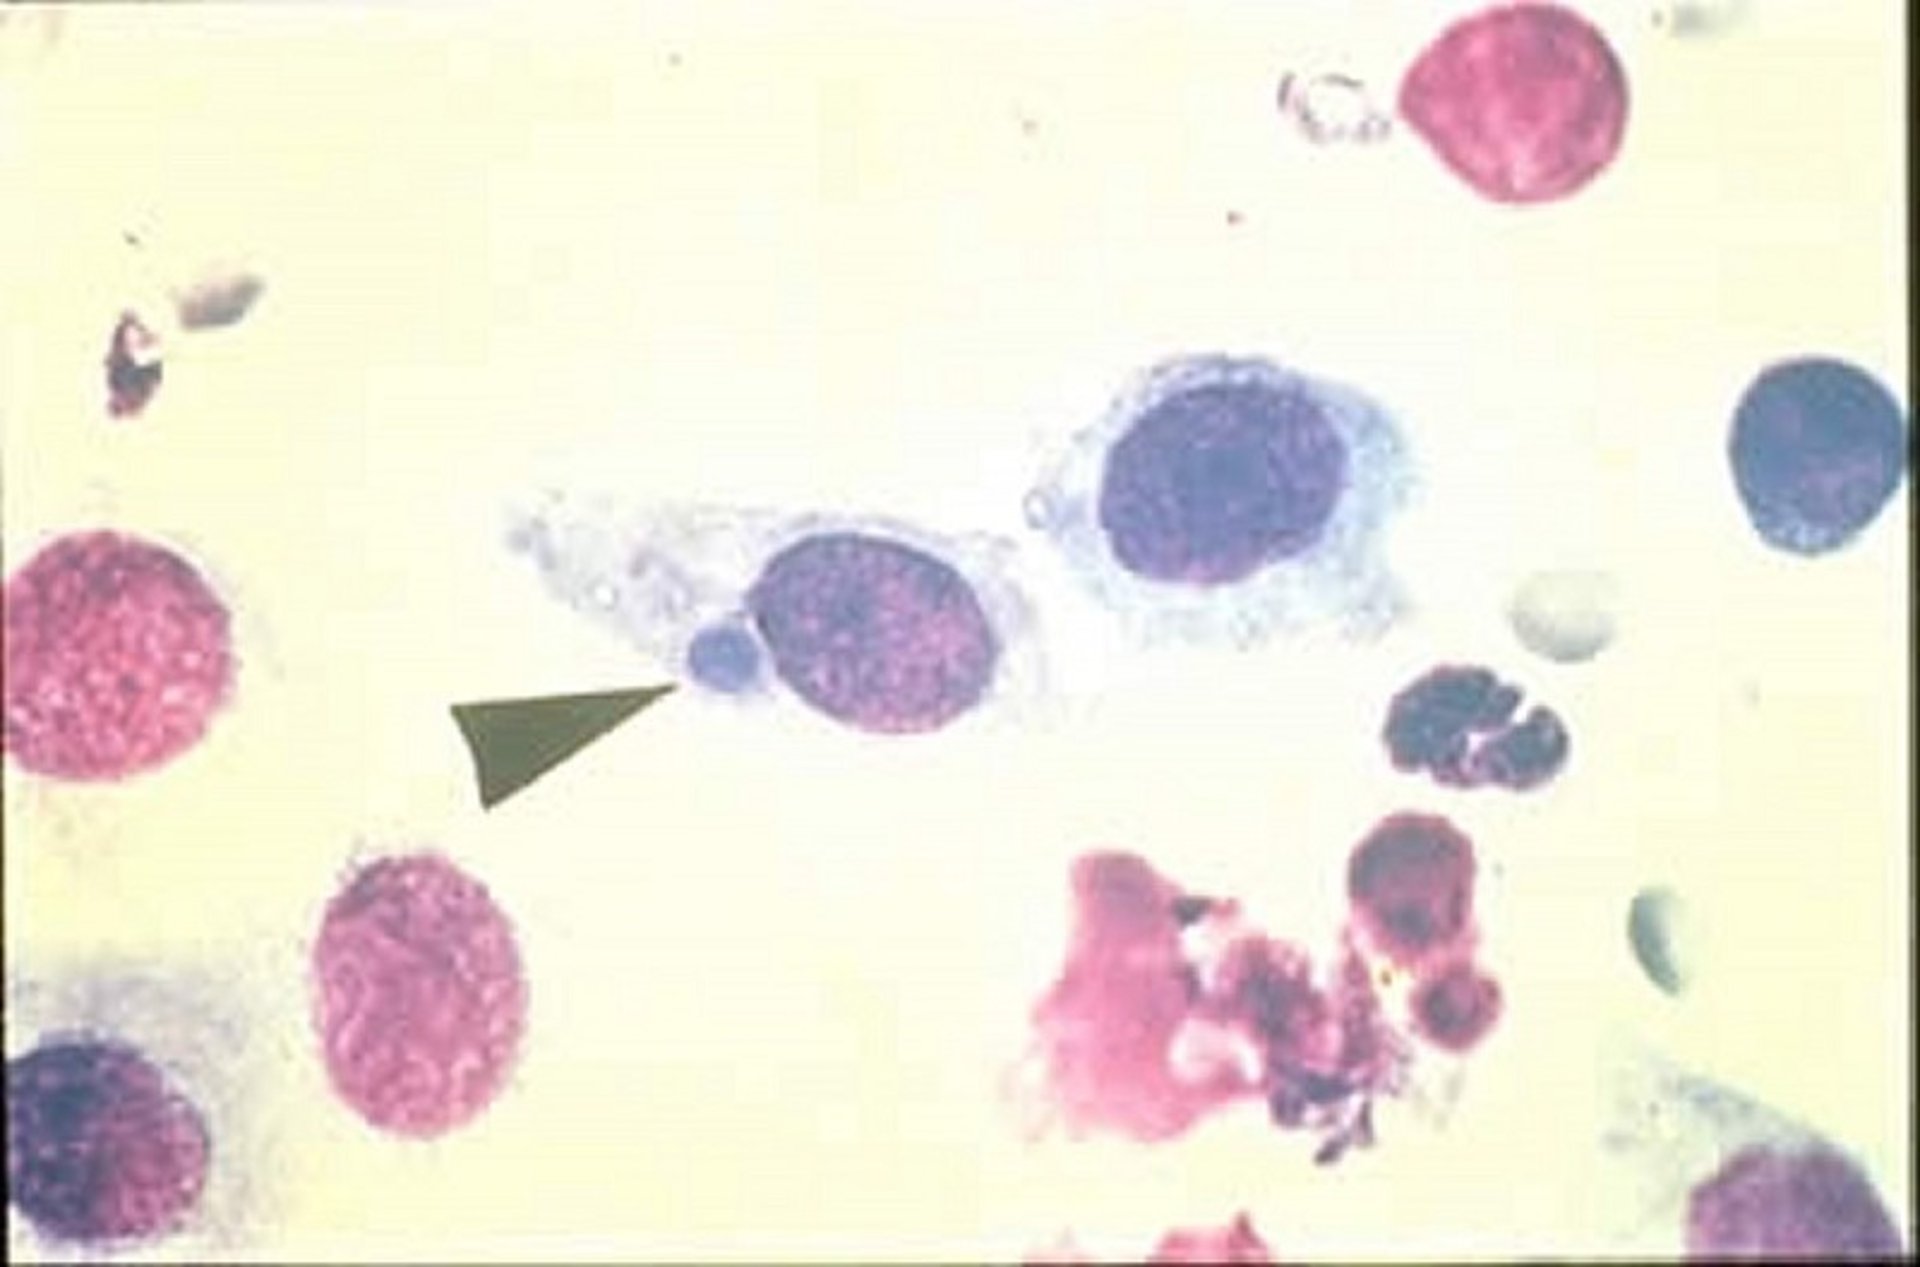 Chlamydial keratoconjunctivitis, cytology, cat